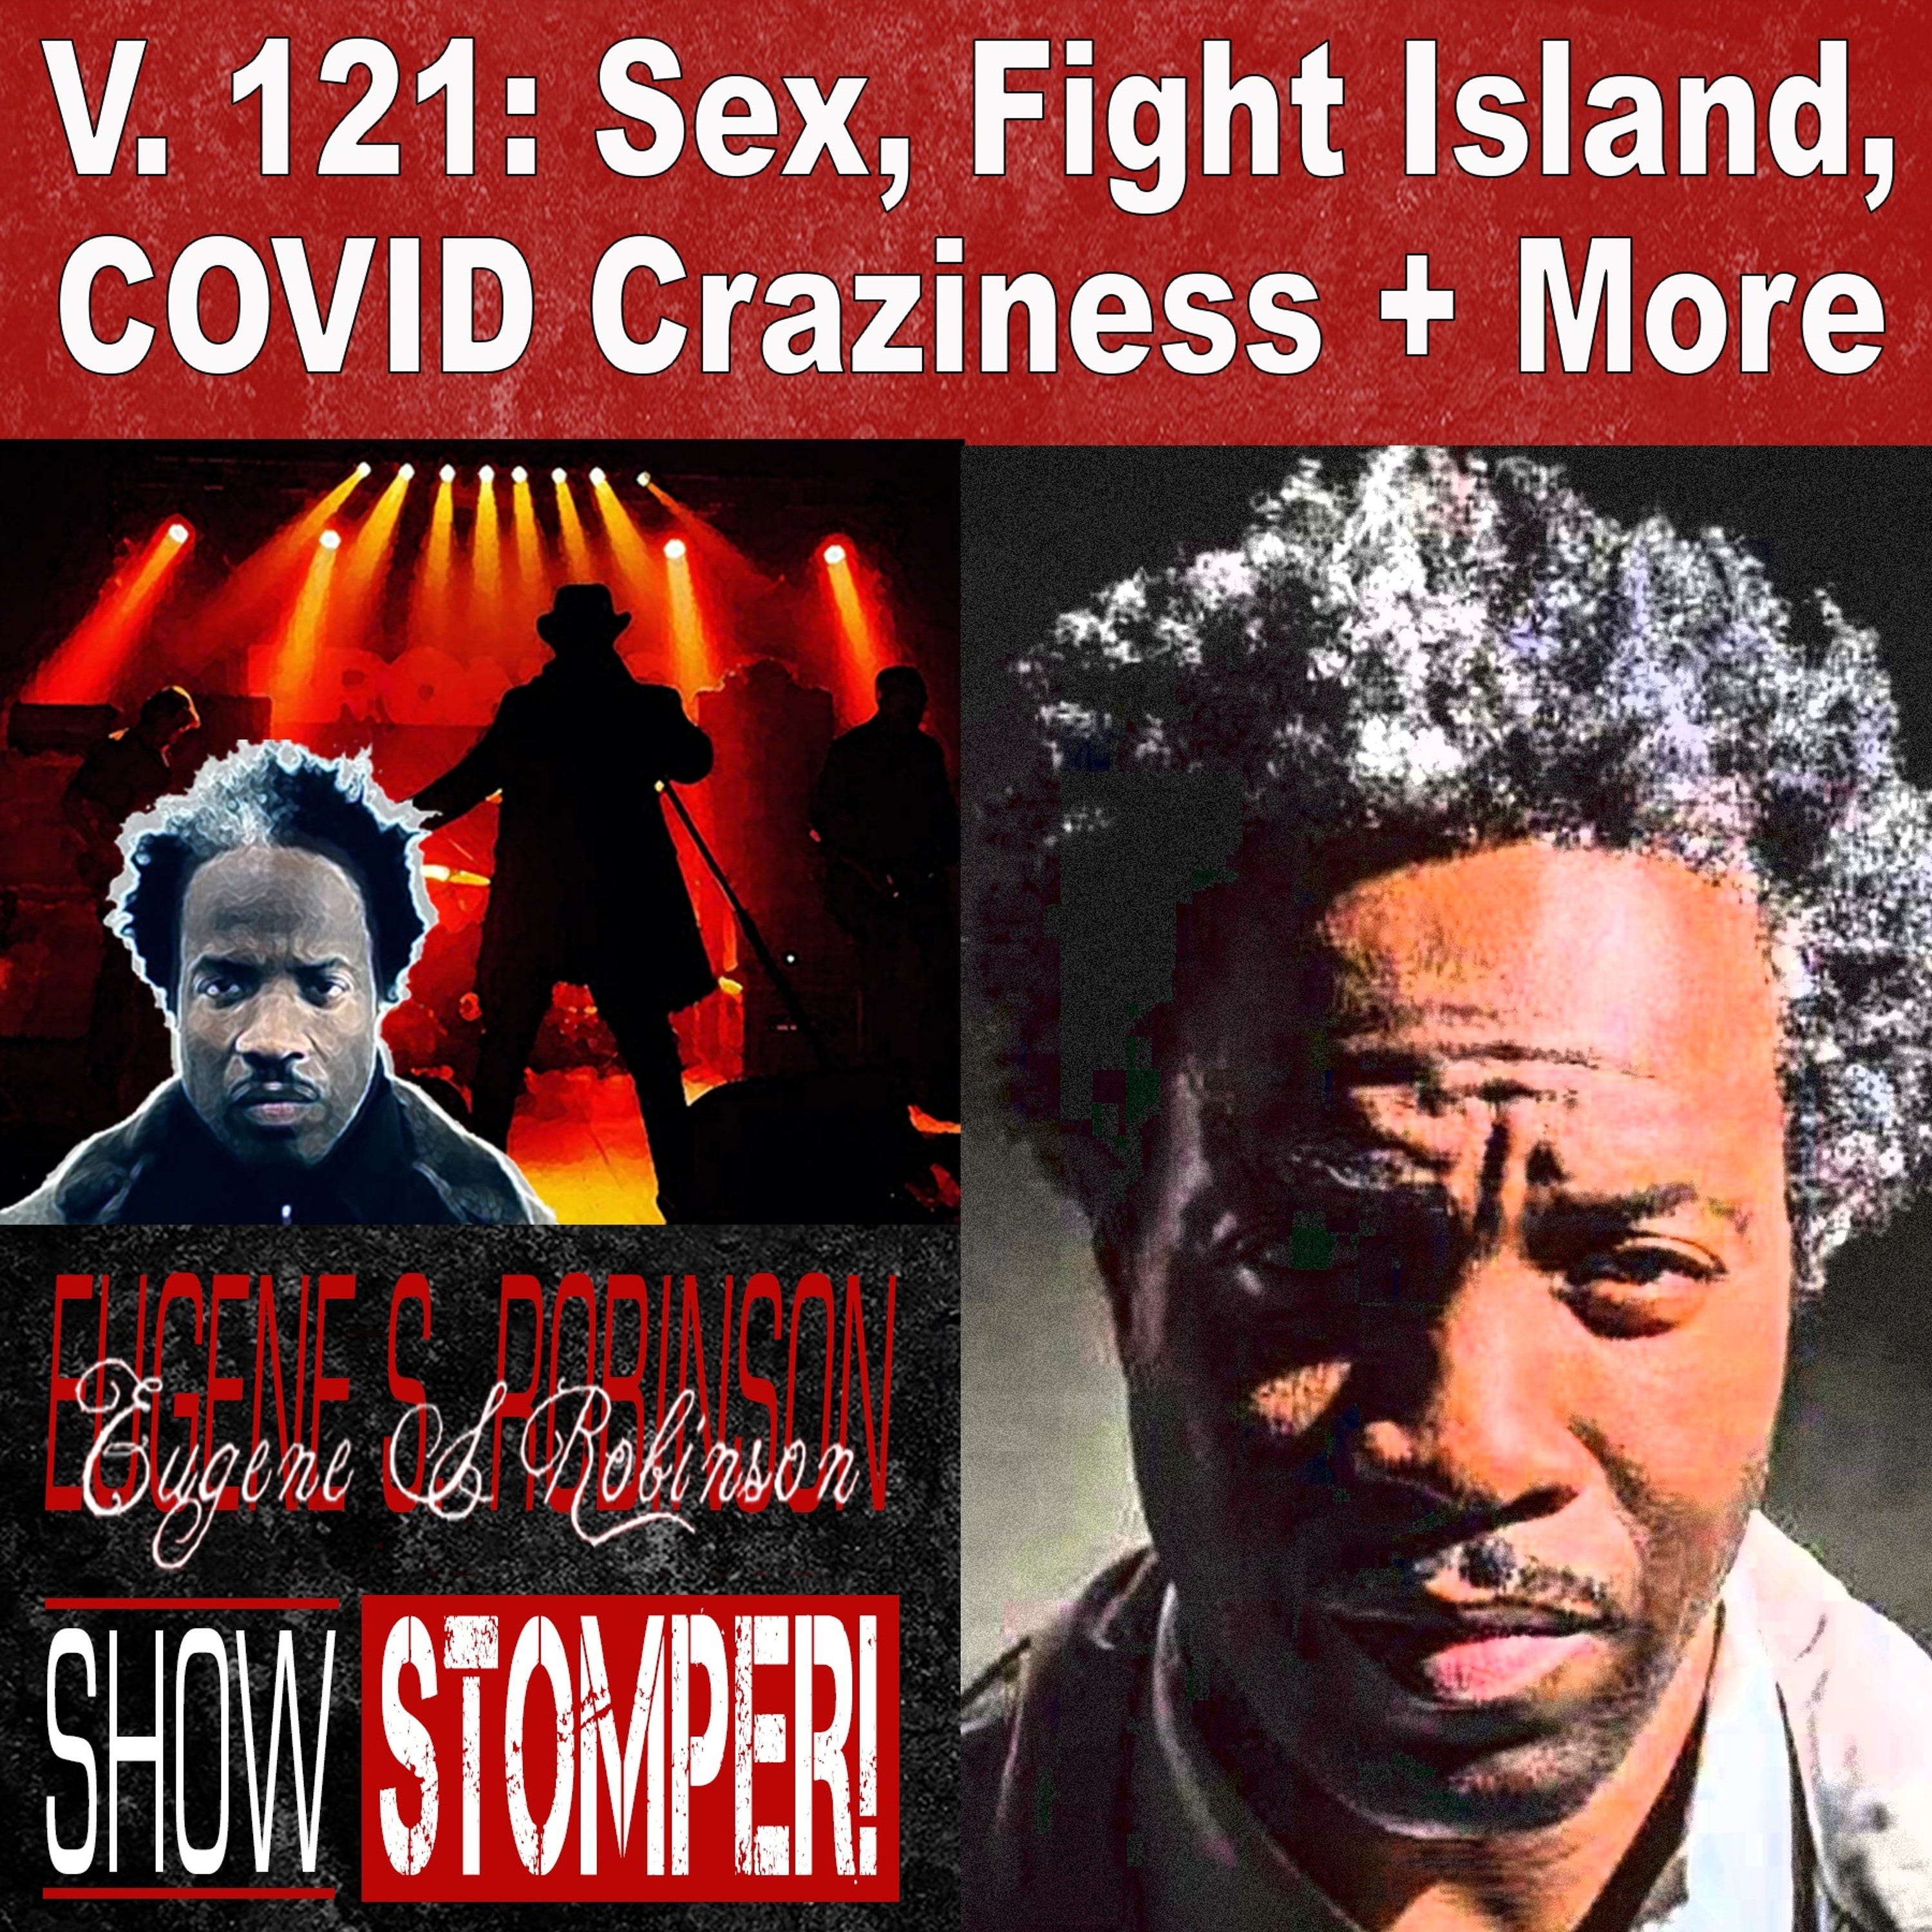 V. 121 Sex, Fight Island, COVID Craziness + More On The Eugene S. Robinson Show Stomper!